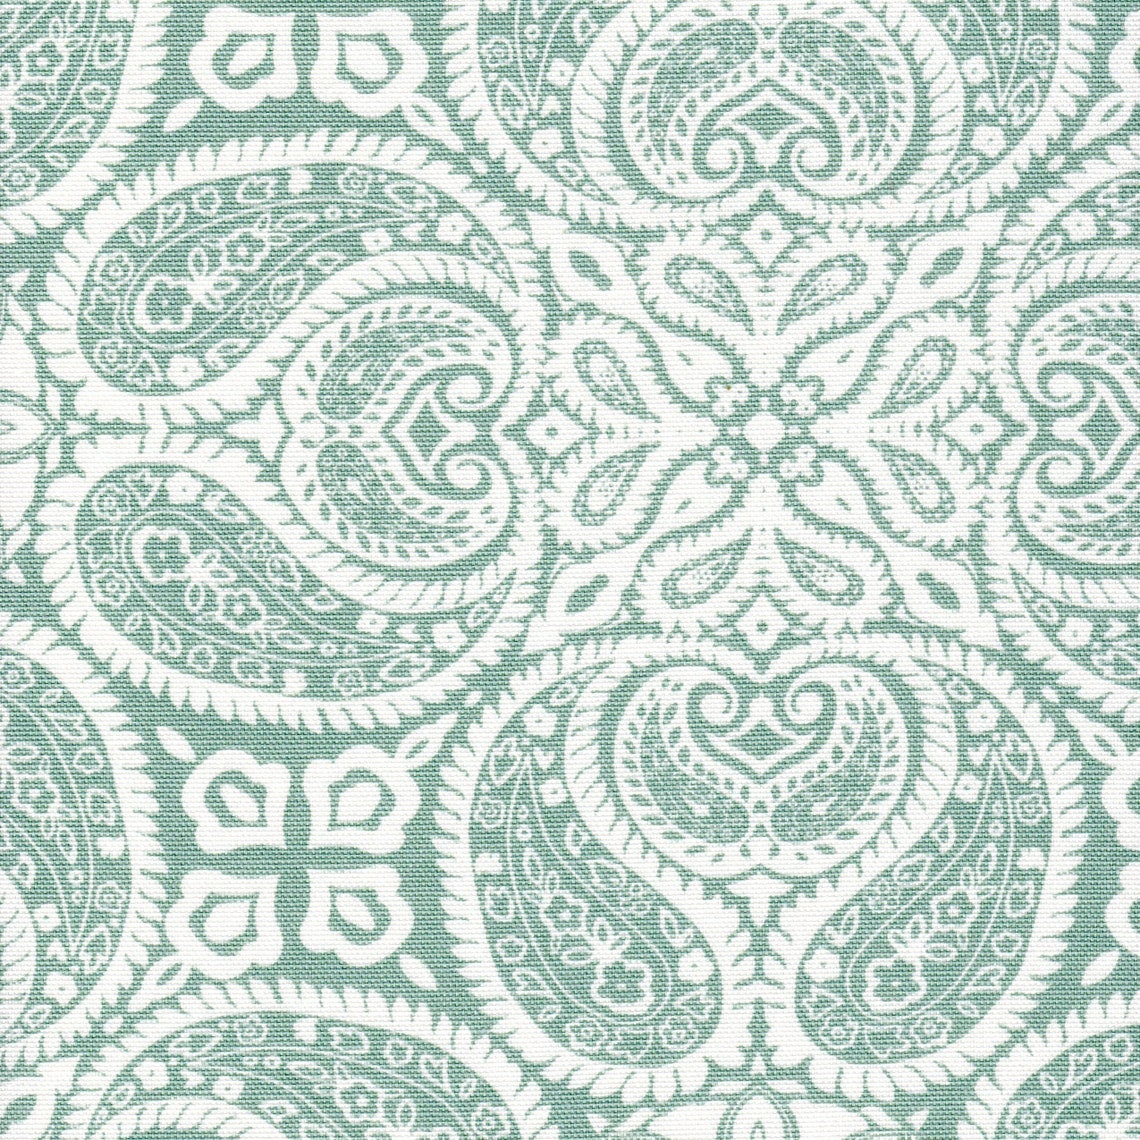 duvet cover in tibi spa green geometric paisley